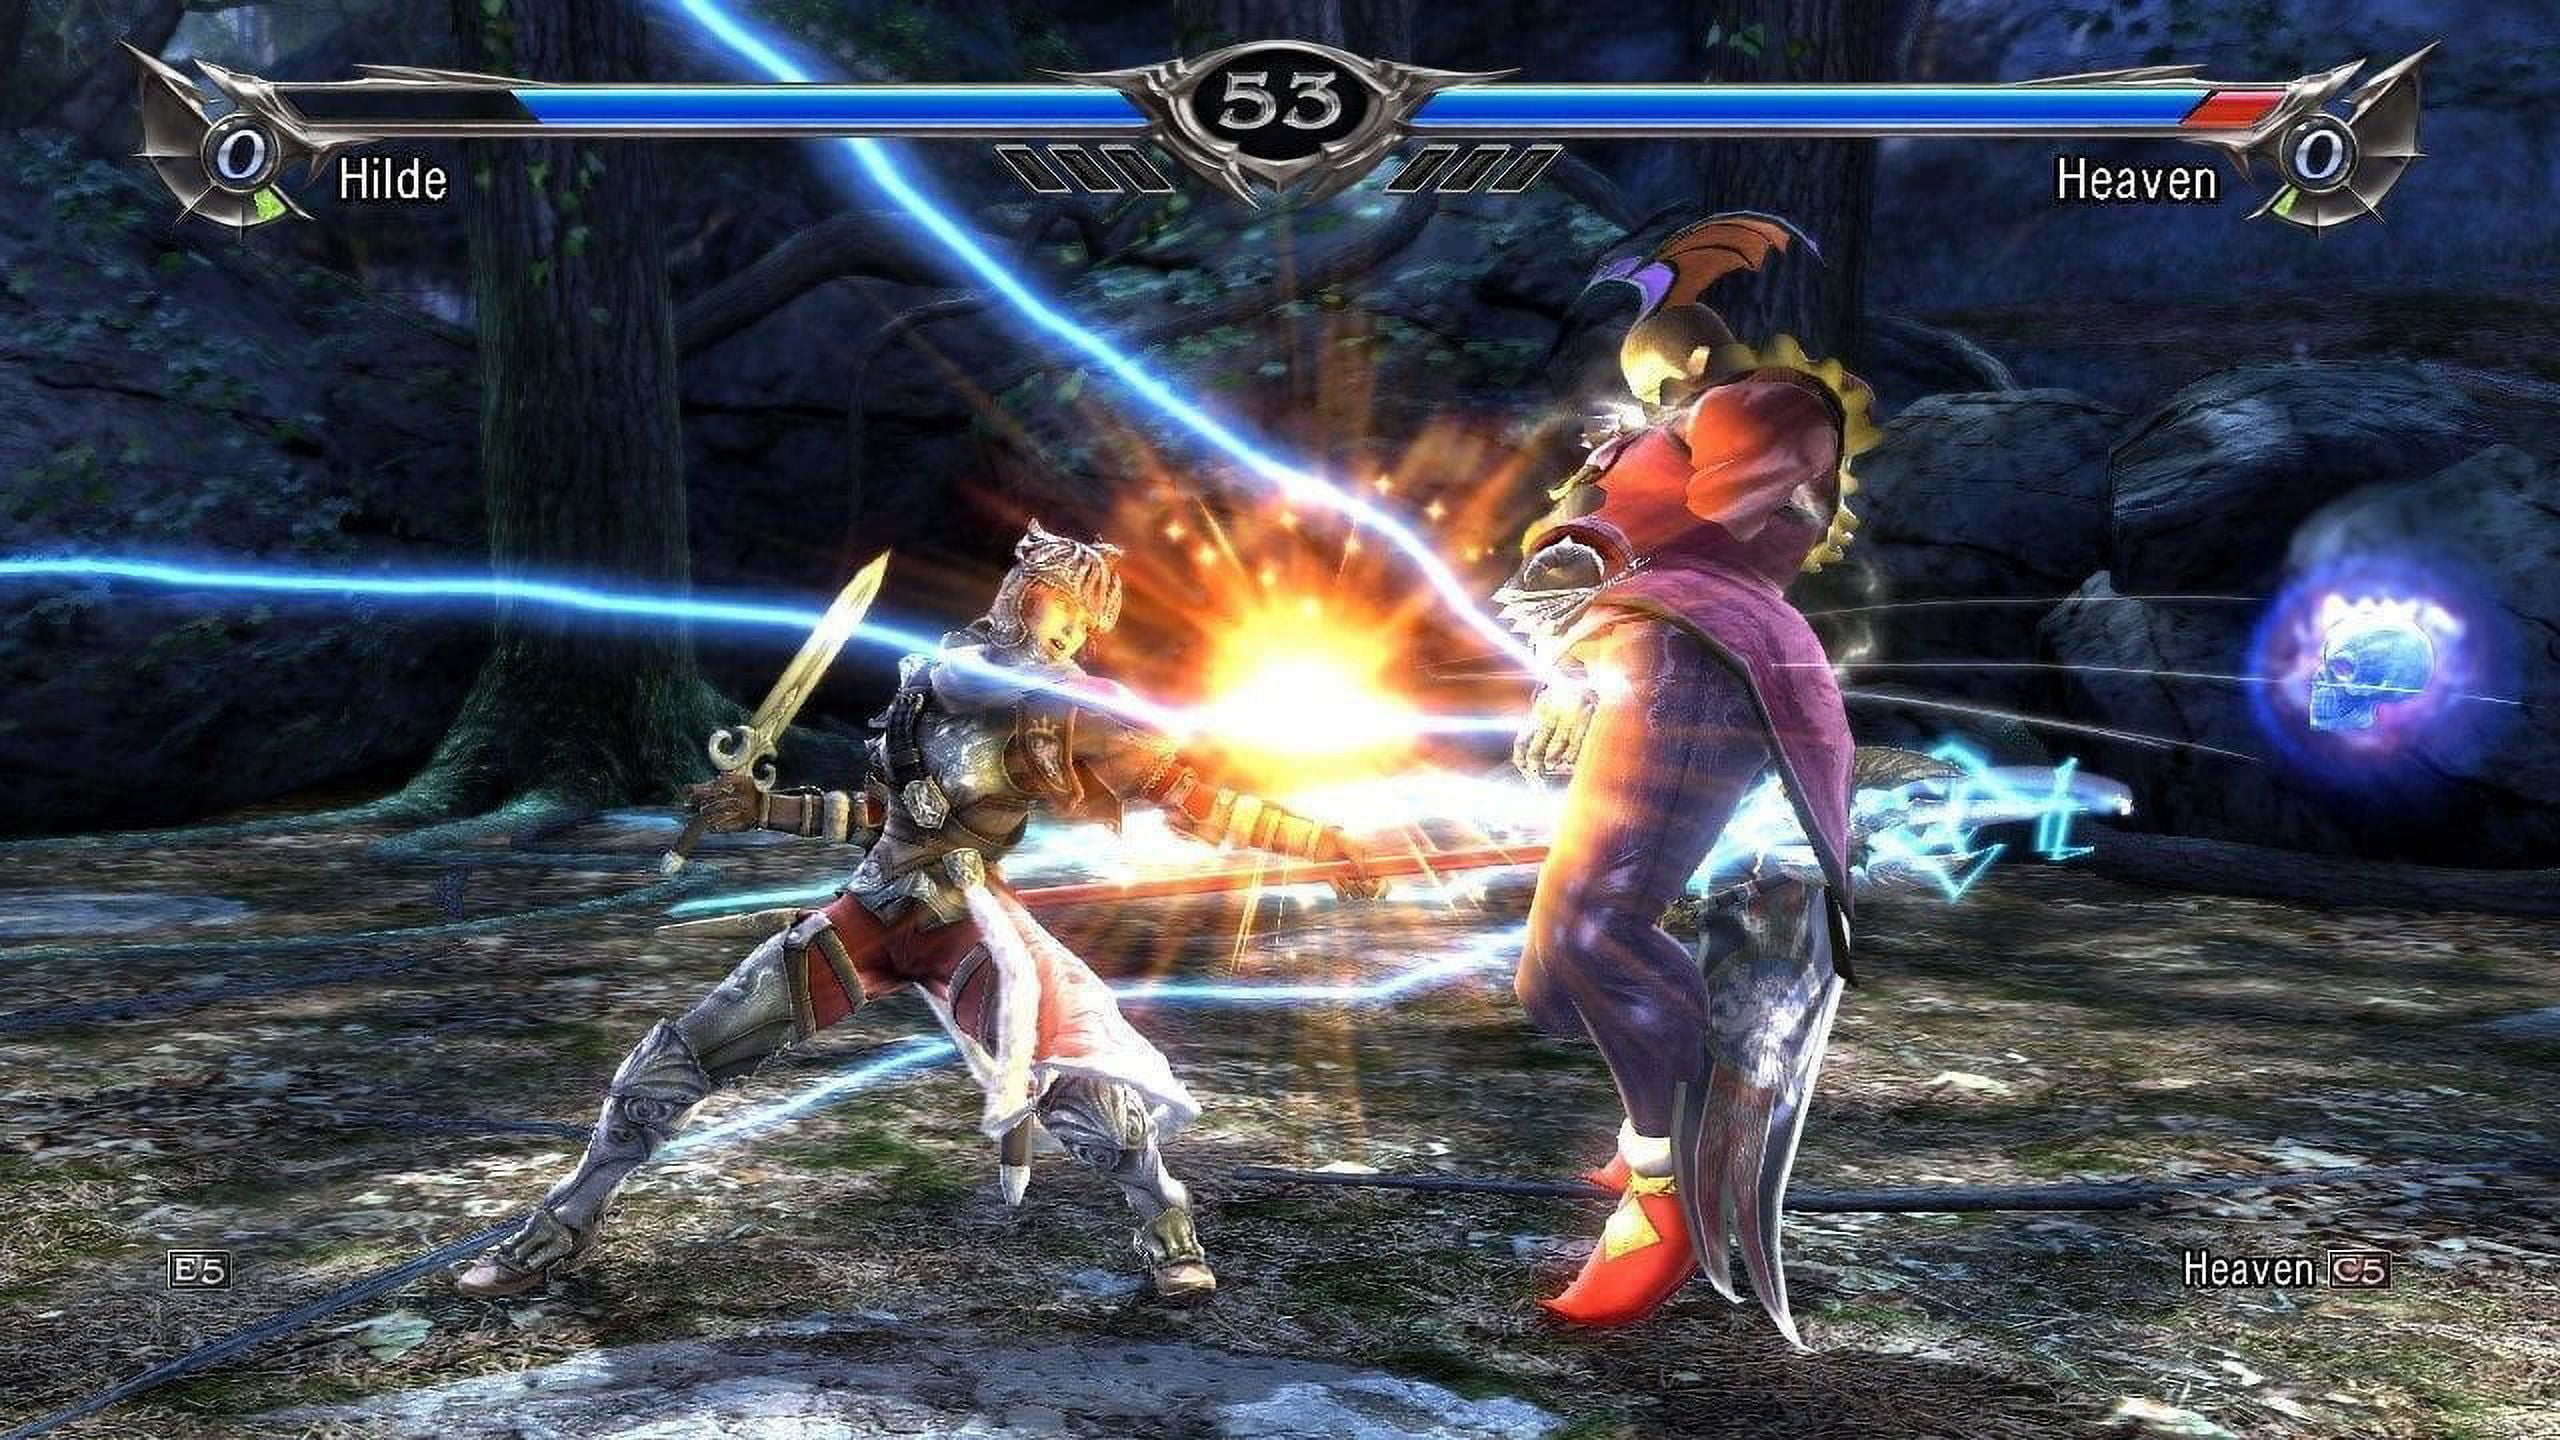 Fighting Edition: Tekken Tag 2, Tekken 6 & Soulcalibur V - PS3 - Sony -  Outros Games - Magazine Luiza